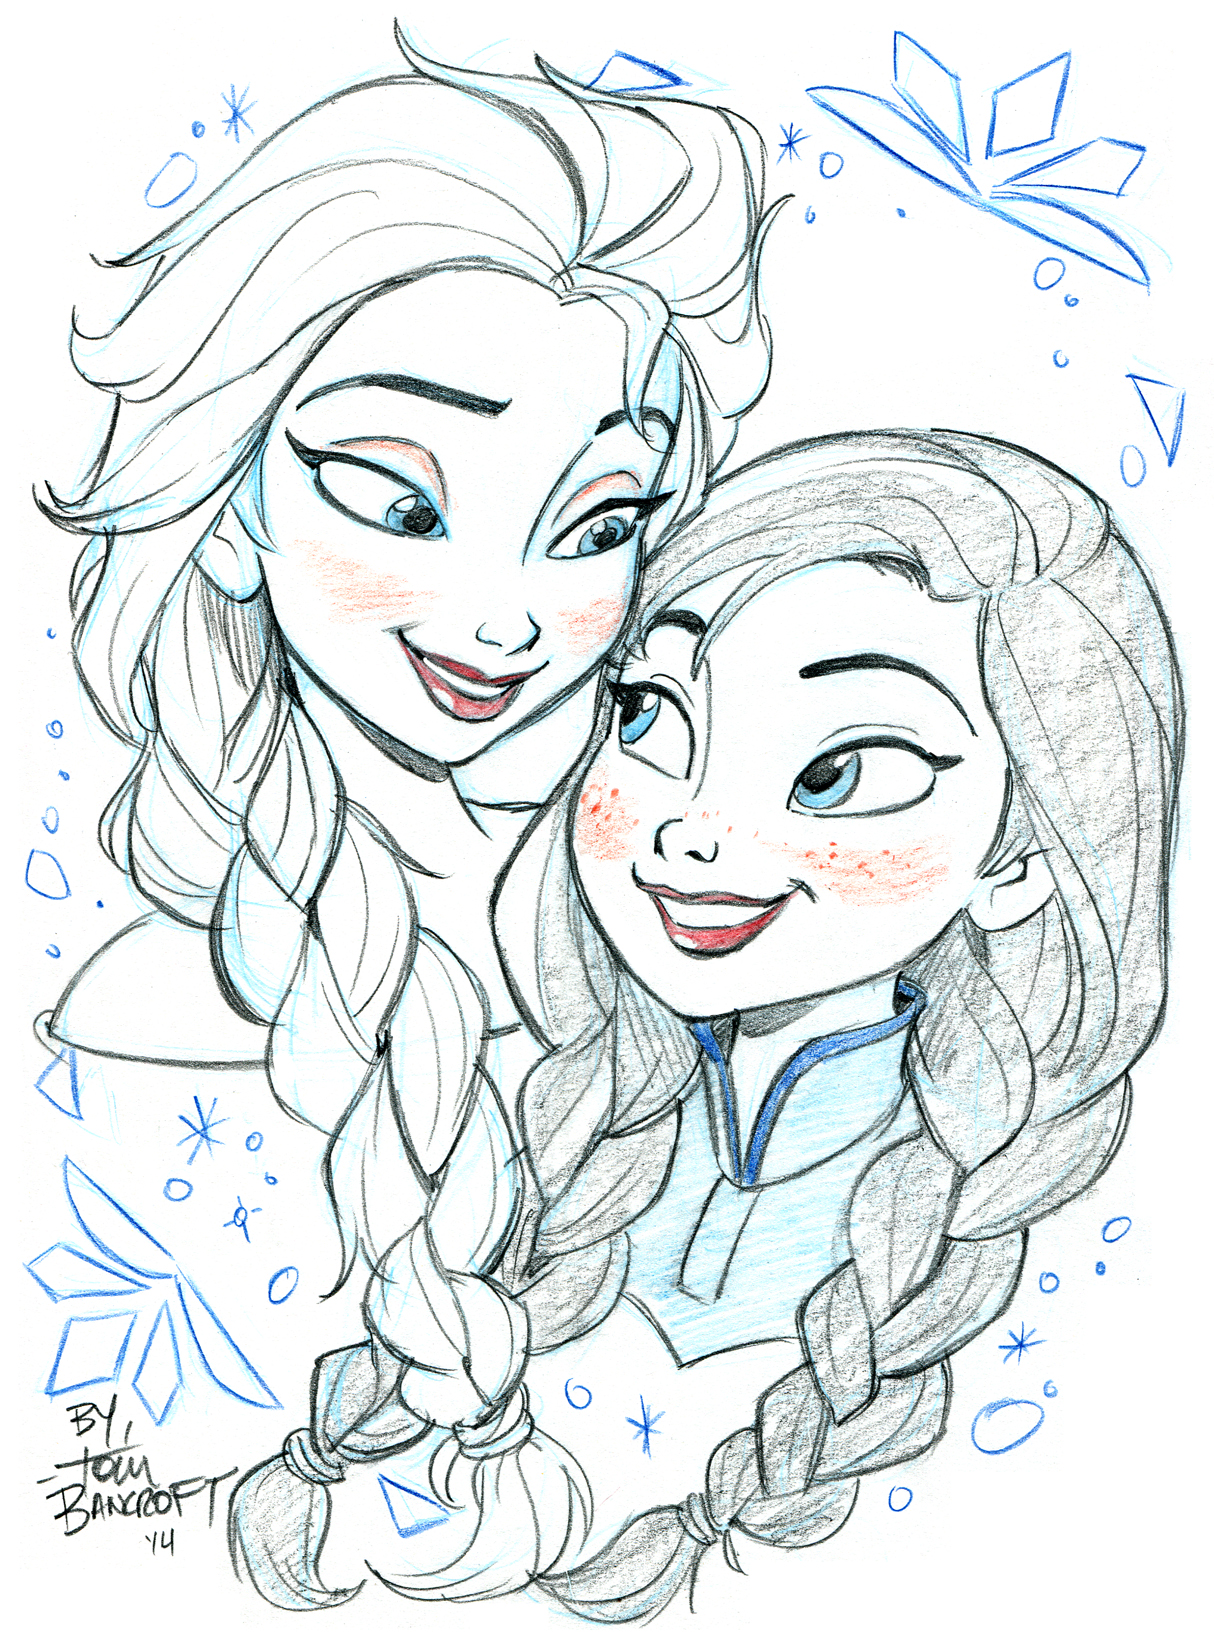 elsa and anna (frozen) drawn by tom_bancroft | Danbooru